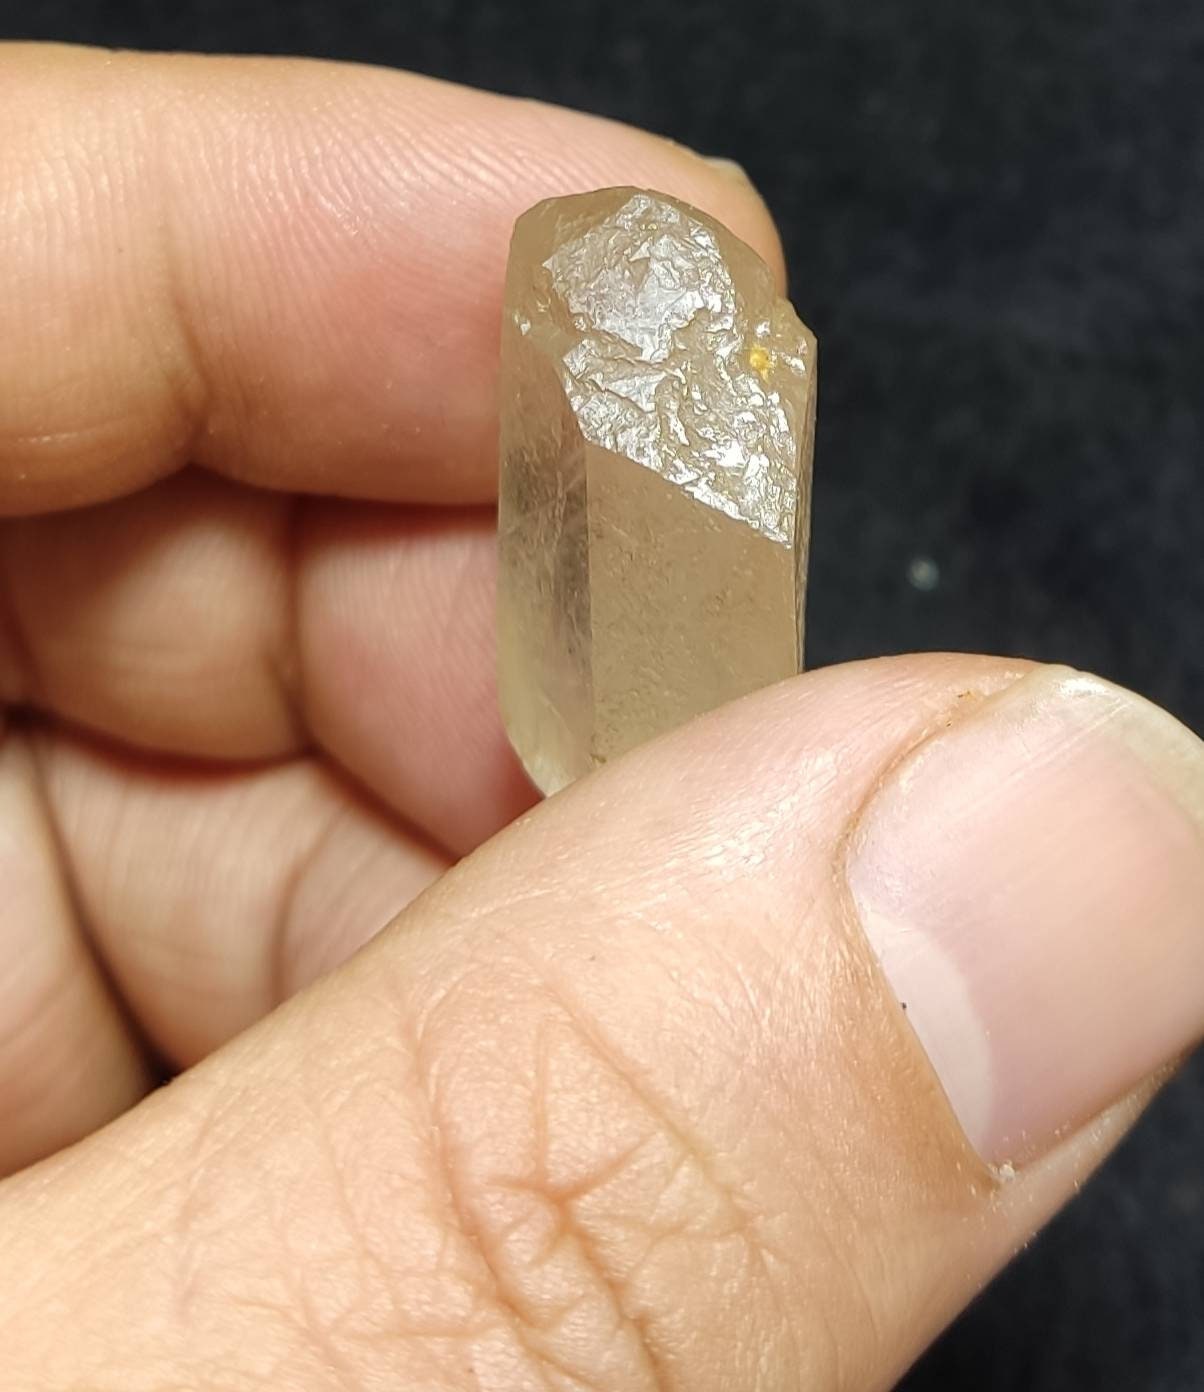 An amazing Beautiful specimen of gwindel Quartz Crystal 11 grams